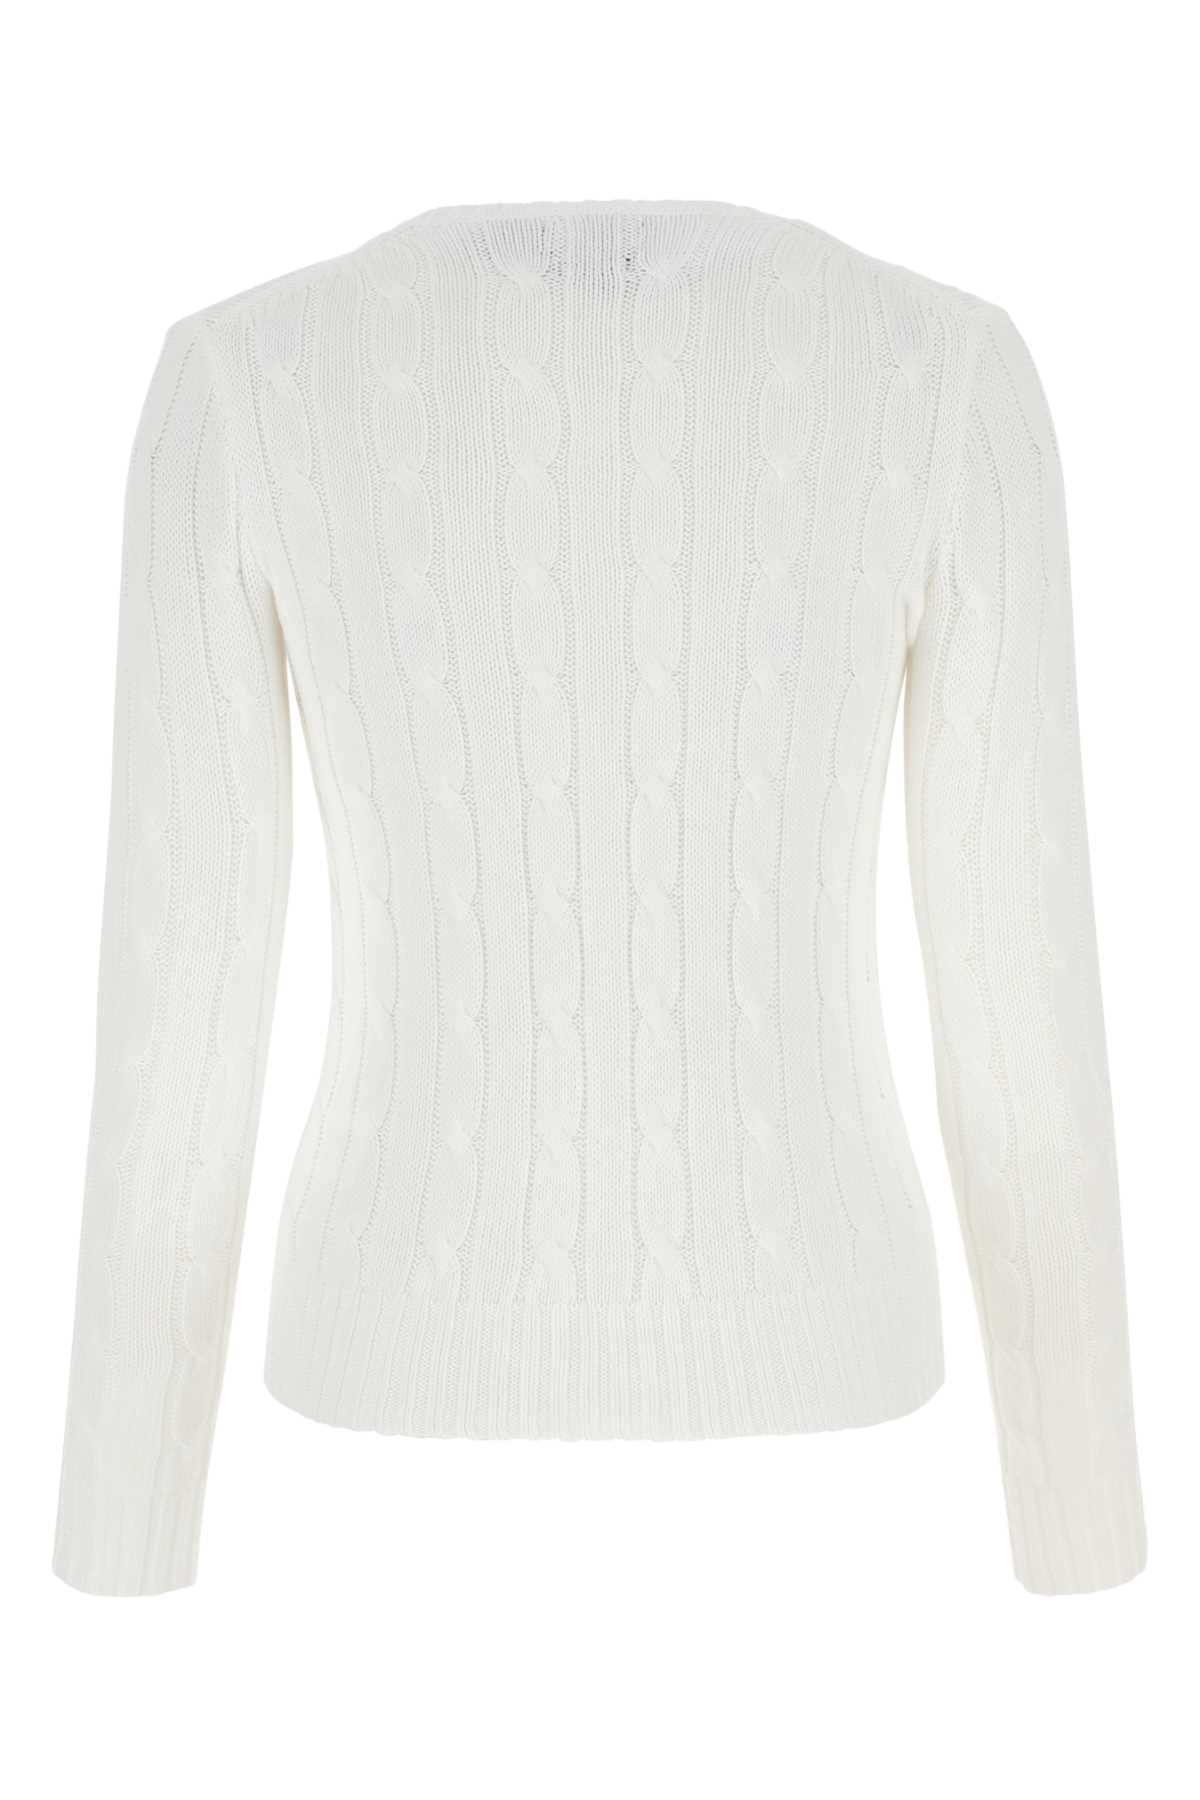 Polo Ralph Lauren White Cotton Sweater